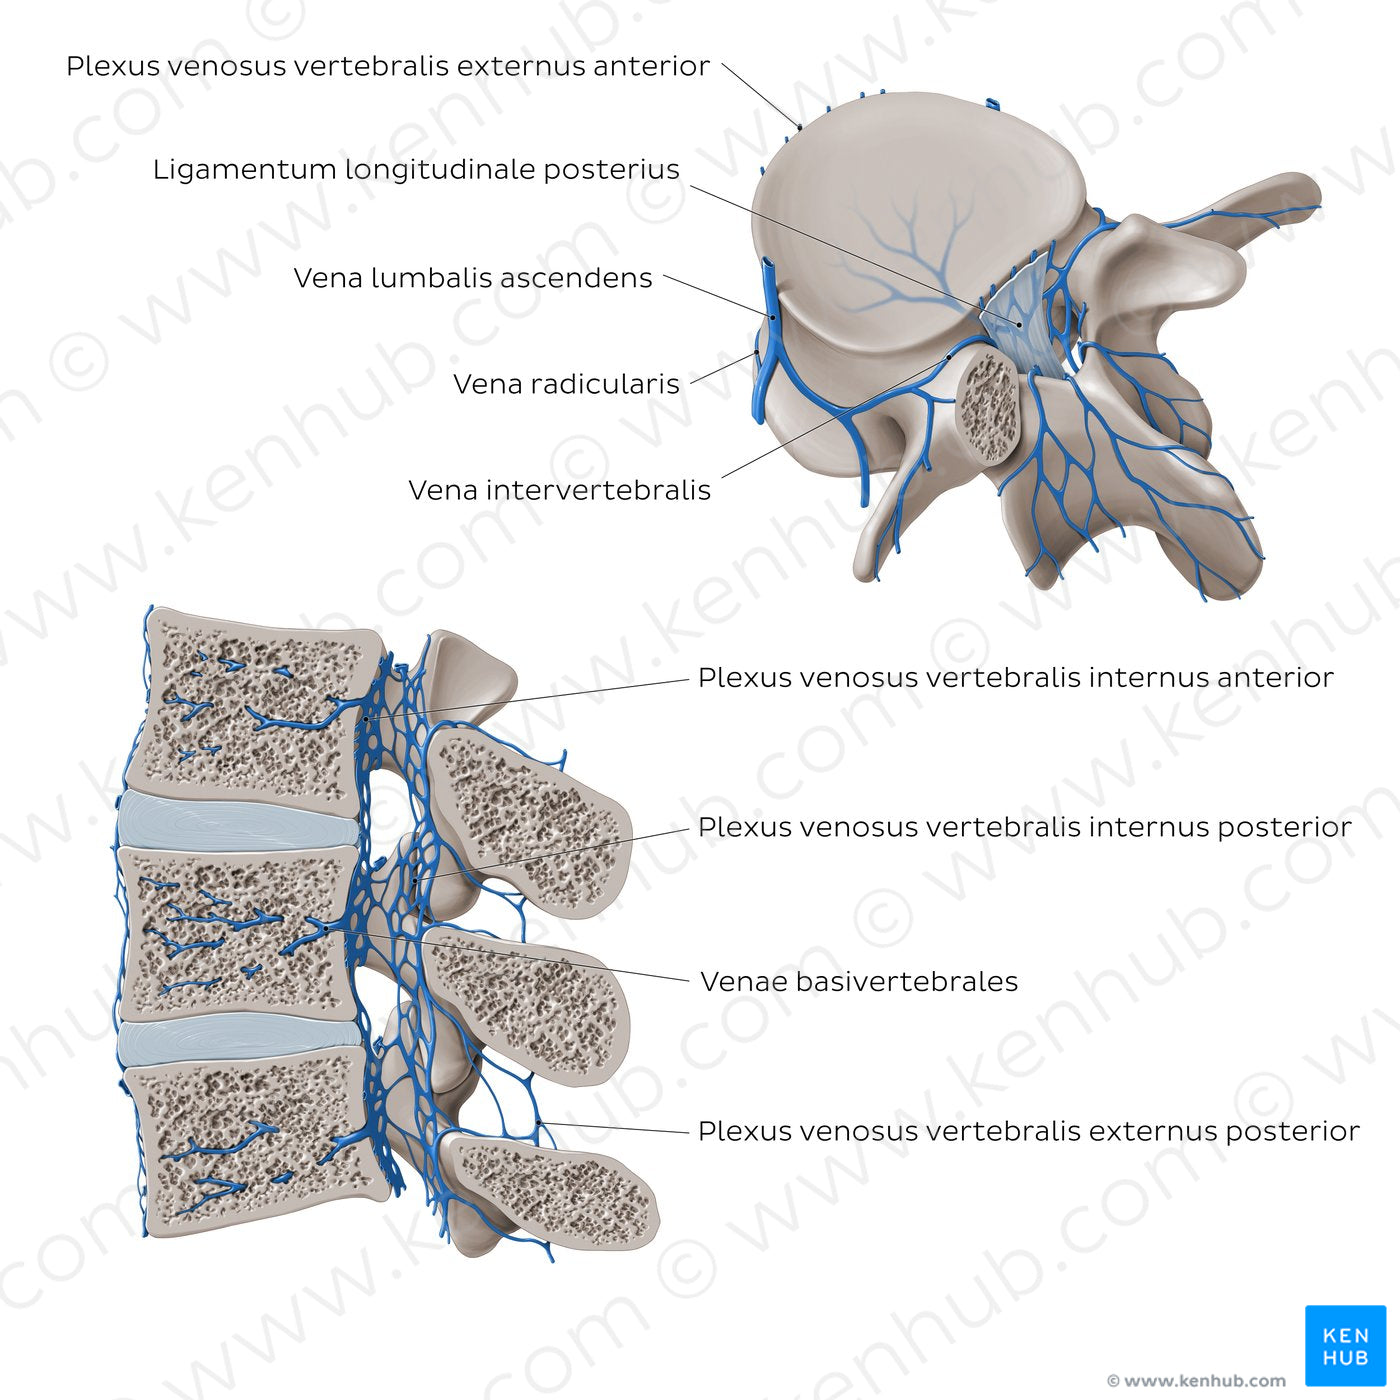 Veins of the vertebral column (Latin)